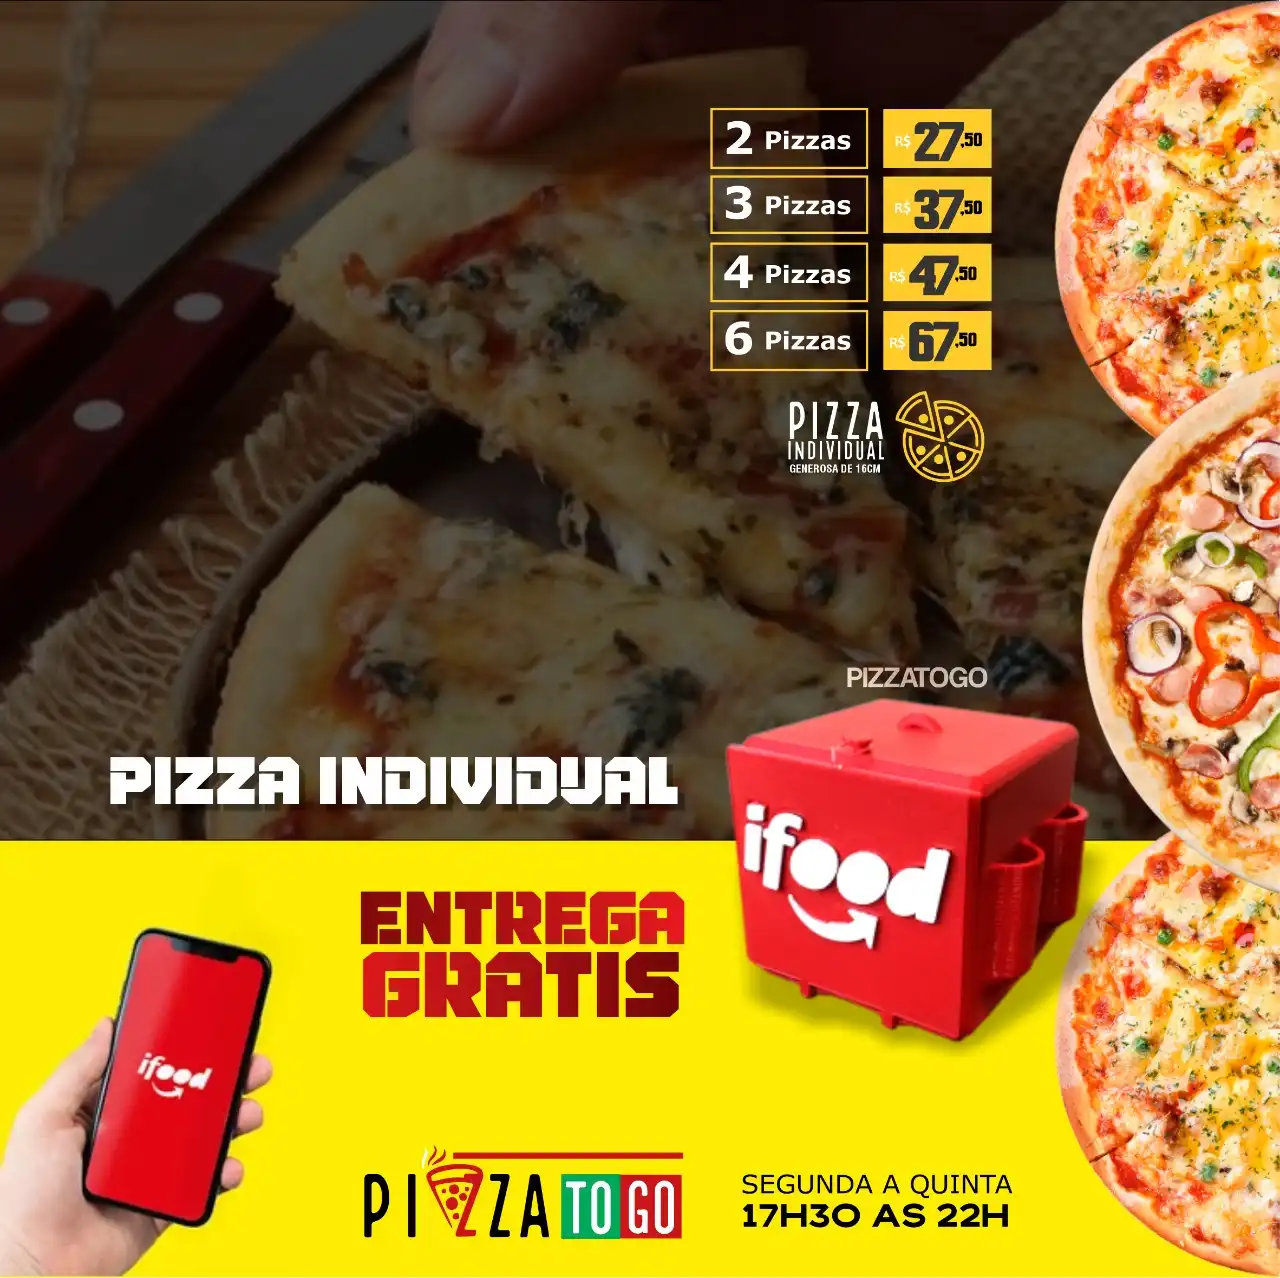 
Propaganda Post Pizza Brotinho Promoção



